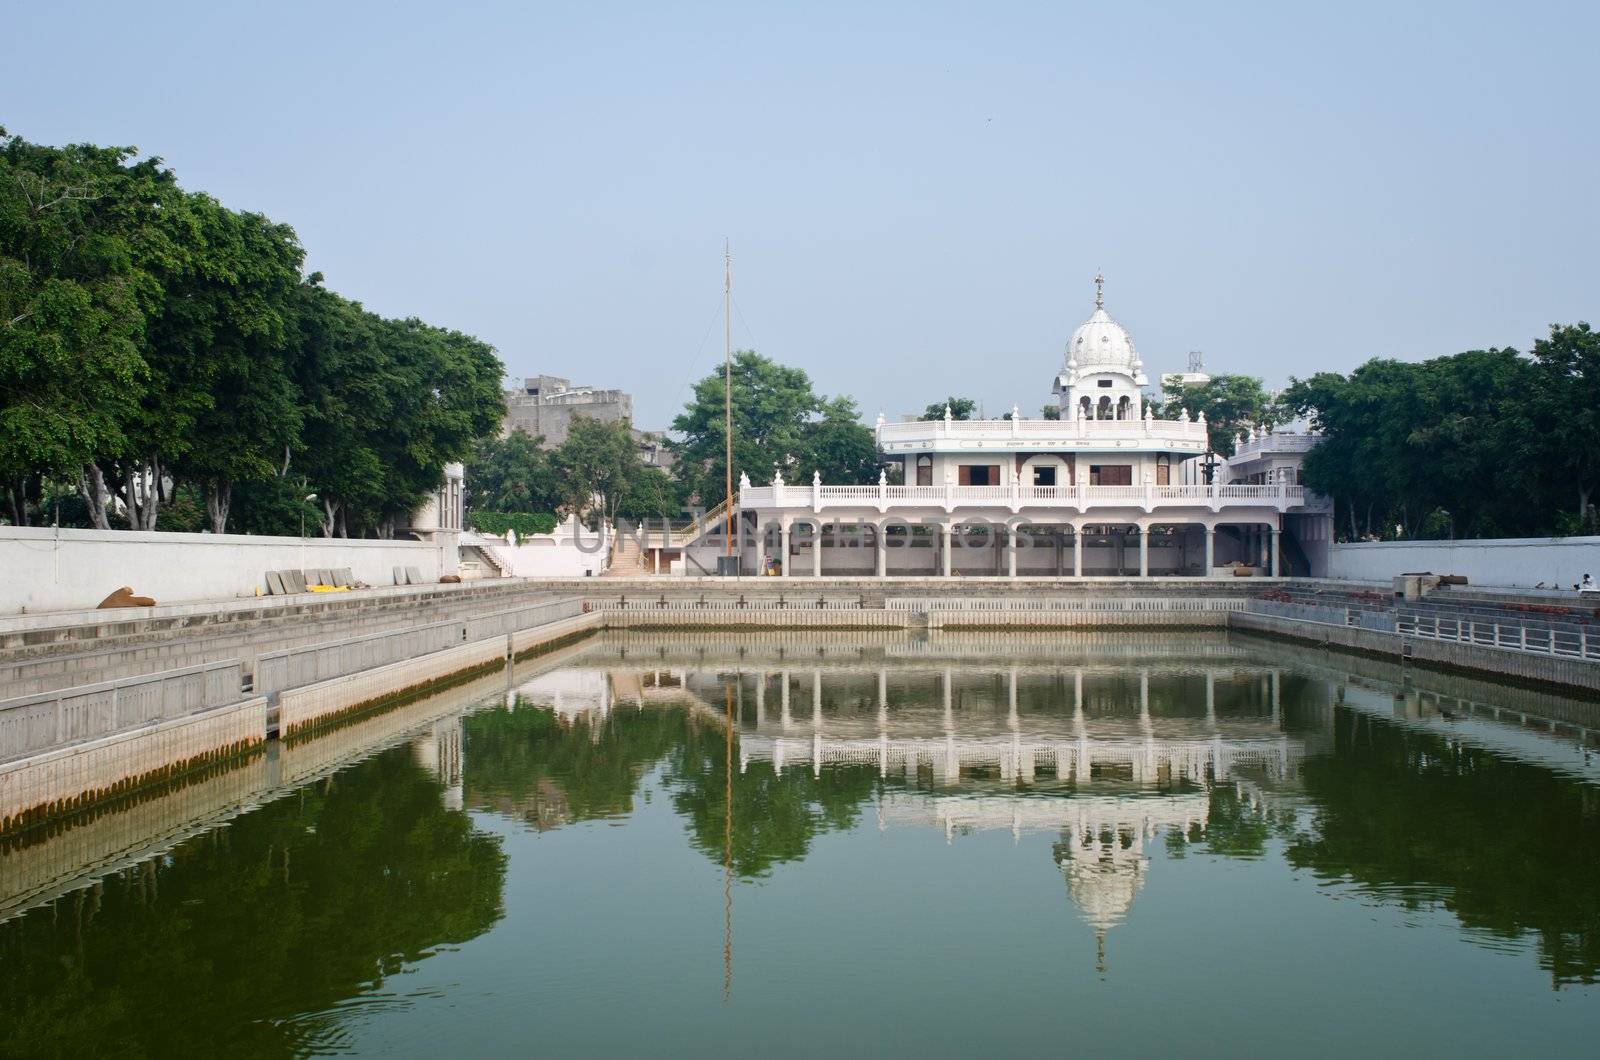 Gurdwara Mata Kaulan and Sarovar Kaulsar (Lotus Tank). The Harmandir Sahib Complex in Amritsar, India, the spiritual and cultural center of the Sikh religion.